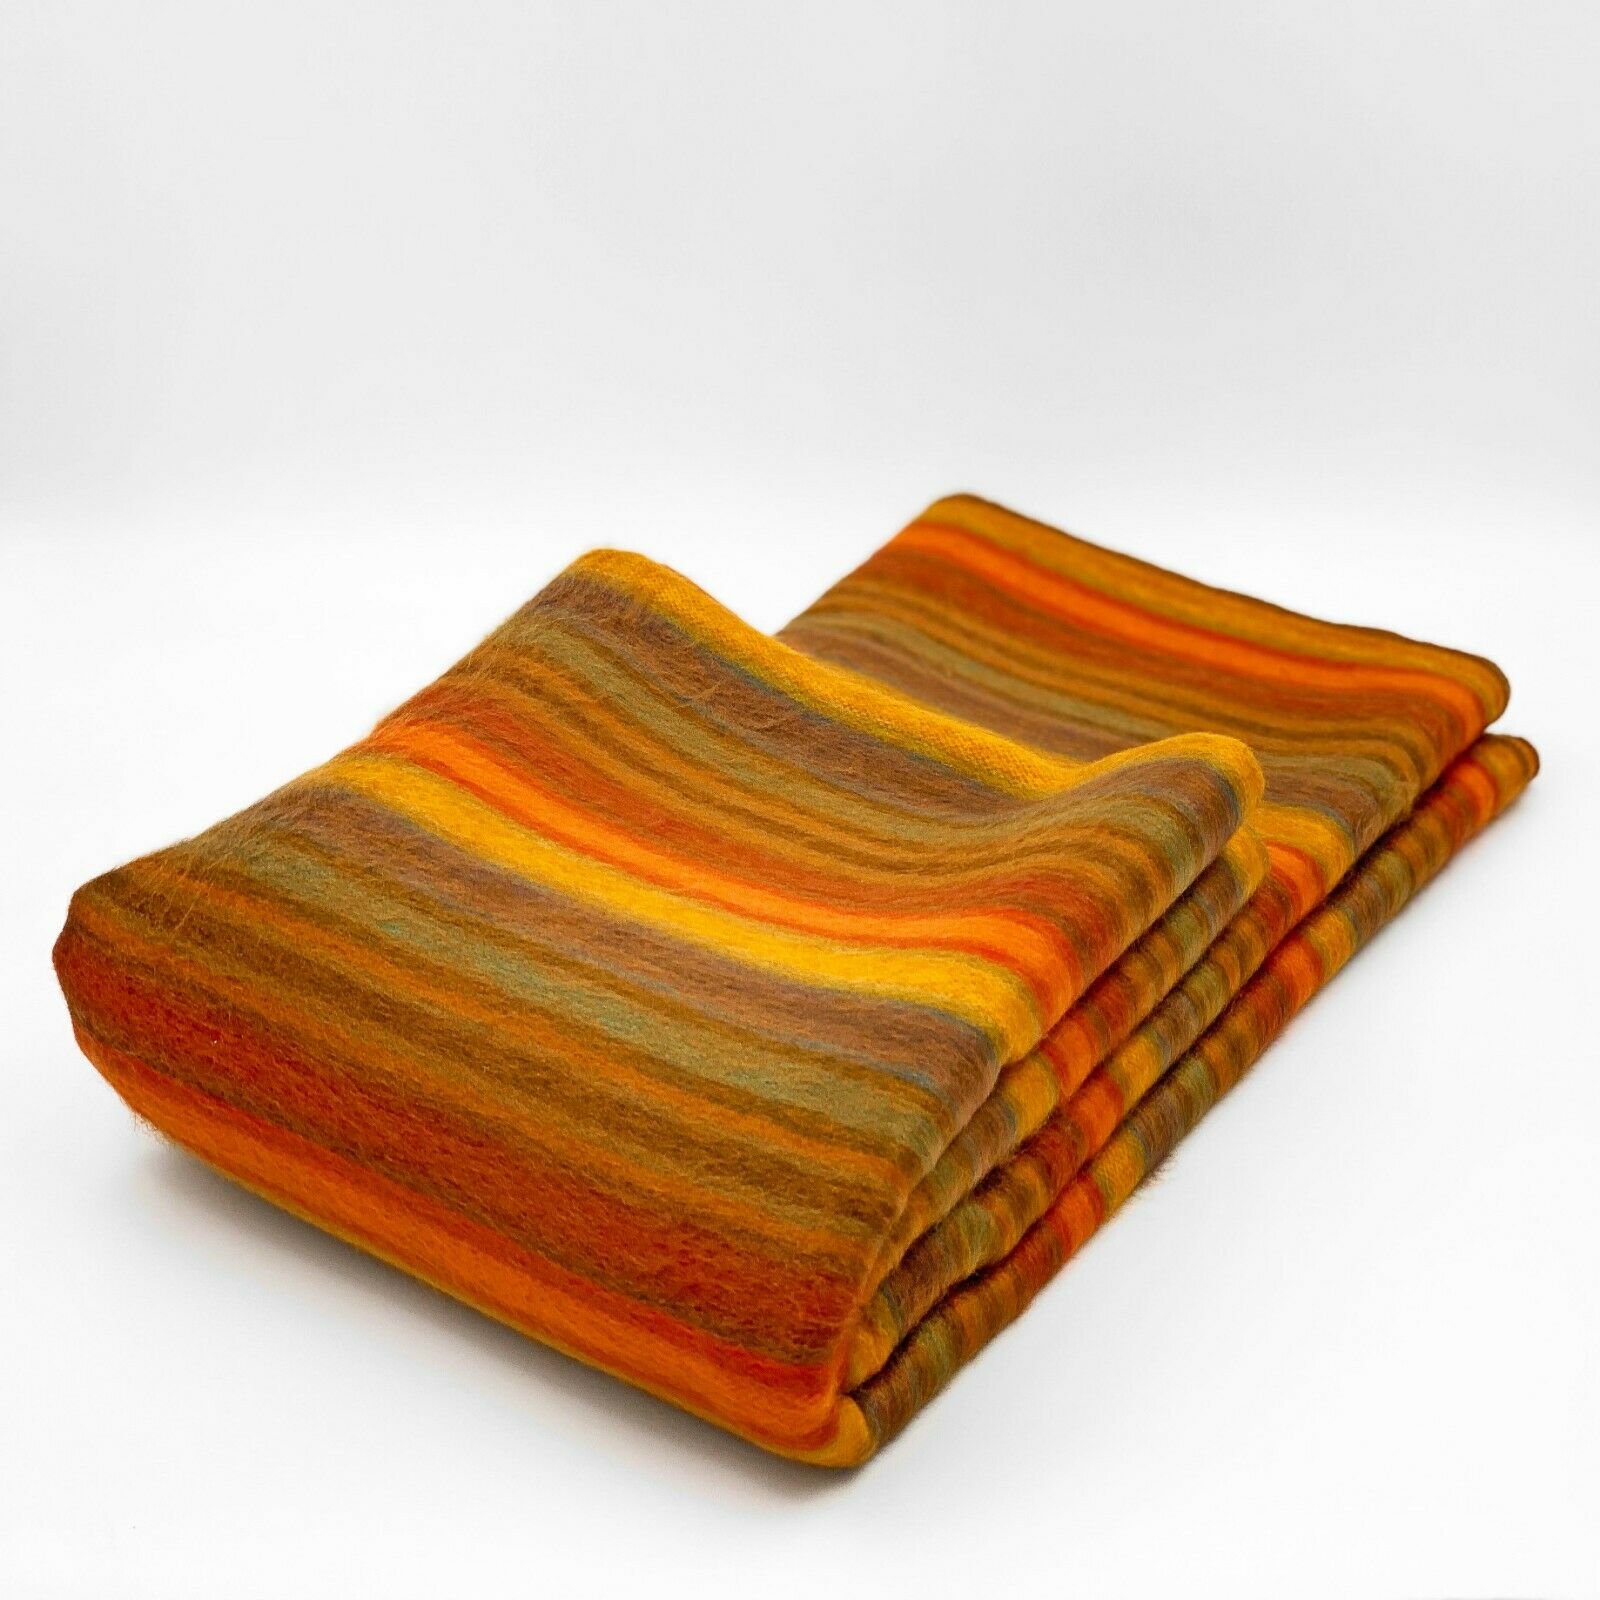 Cumanda - Baby Alpaca Wool Throw Blanket / Sofa Cover - Queen 97" x 67" - multi colored thin stripes pattern